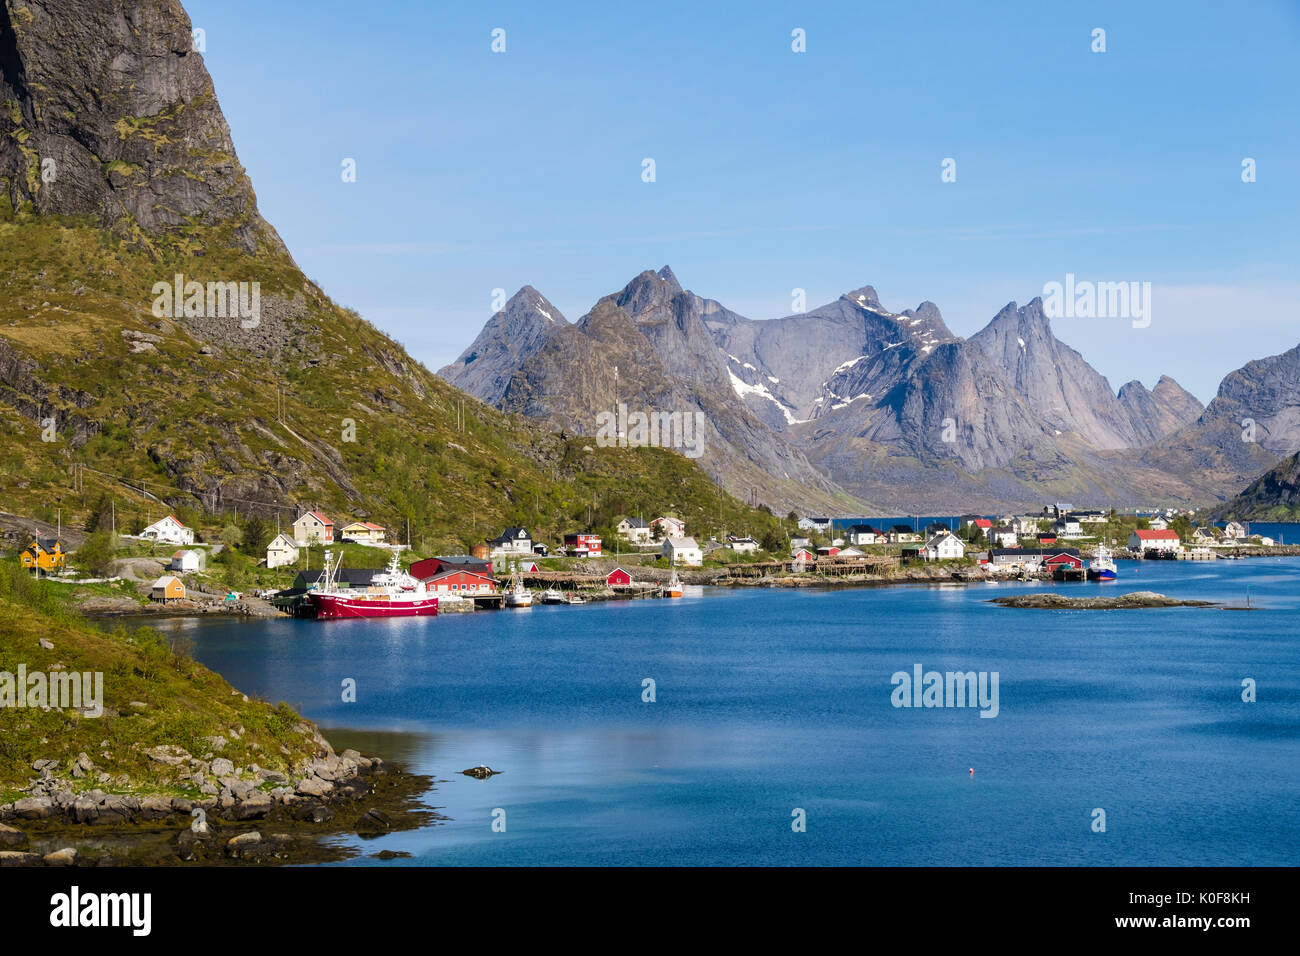 View across the natural fishing harbour to mountains. Reine, Moskenes, Moskenesøya Island, Lofoten Islands, Nordland, Norway, Scandinavia Stock Photo